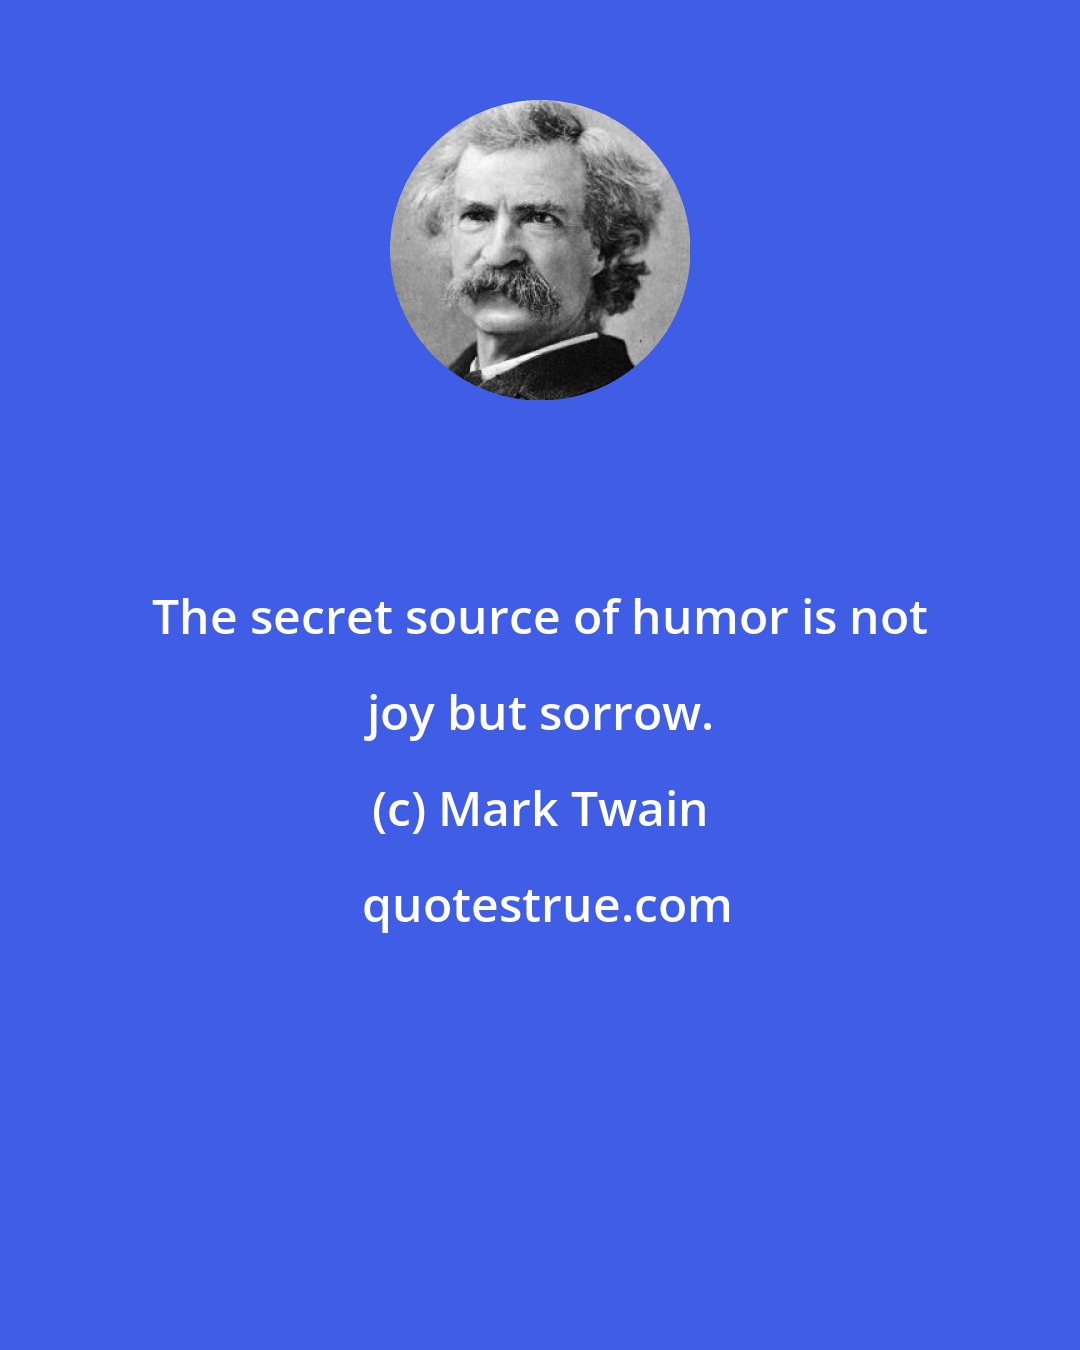 Mark Twain: The secret source of humor is not joy but sorrow.